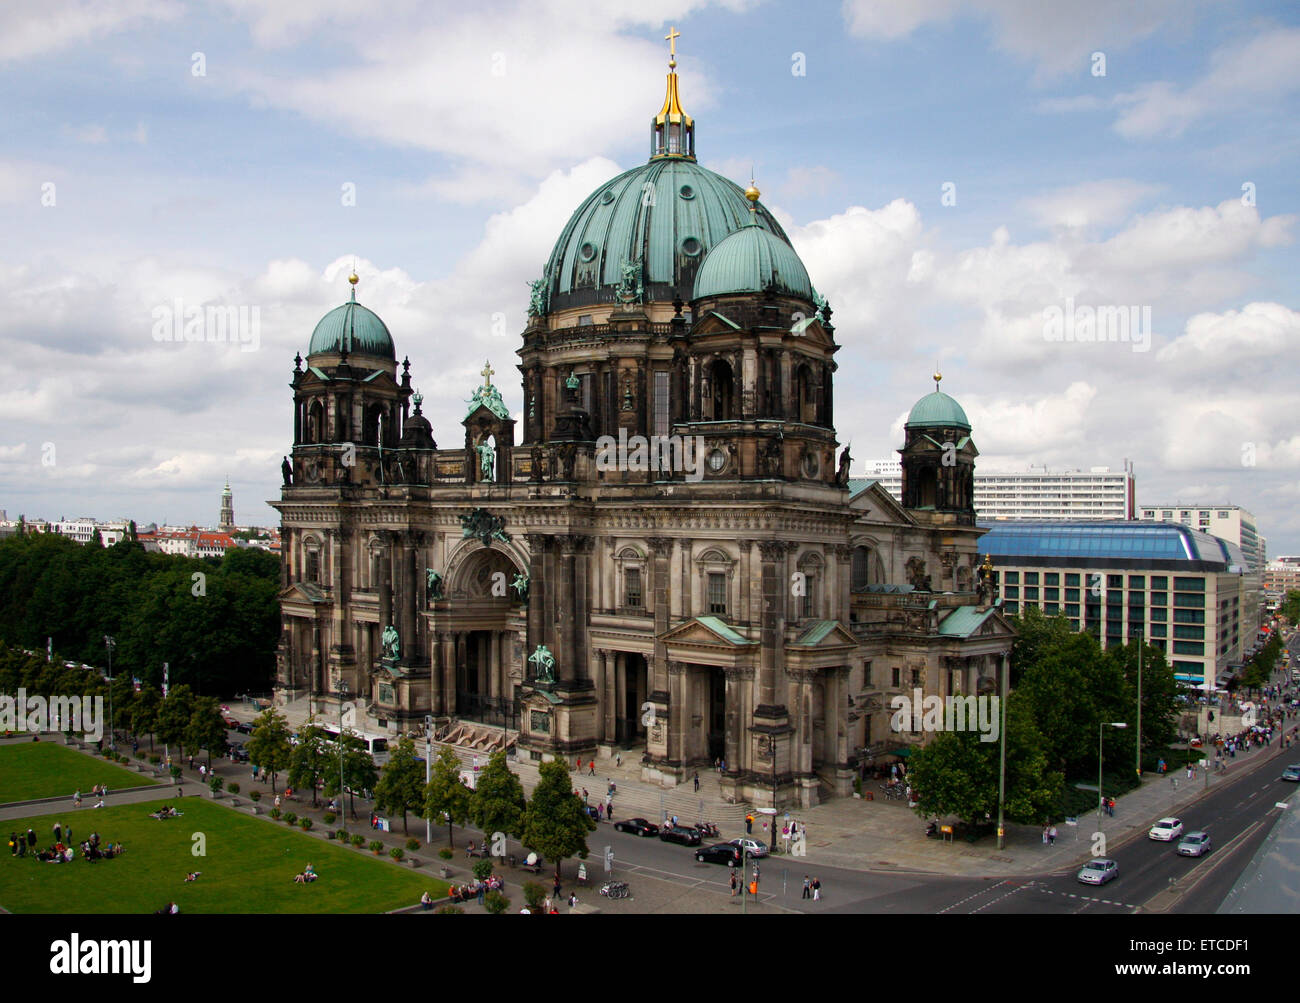 Juni 2012 - BERLIN: Luftaufnahme des "Berliner Dom" (Berliner Dom) in Berlin-Mitte. Stockfoto